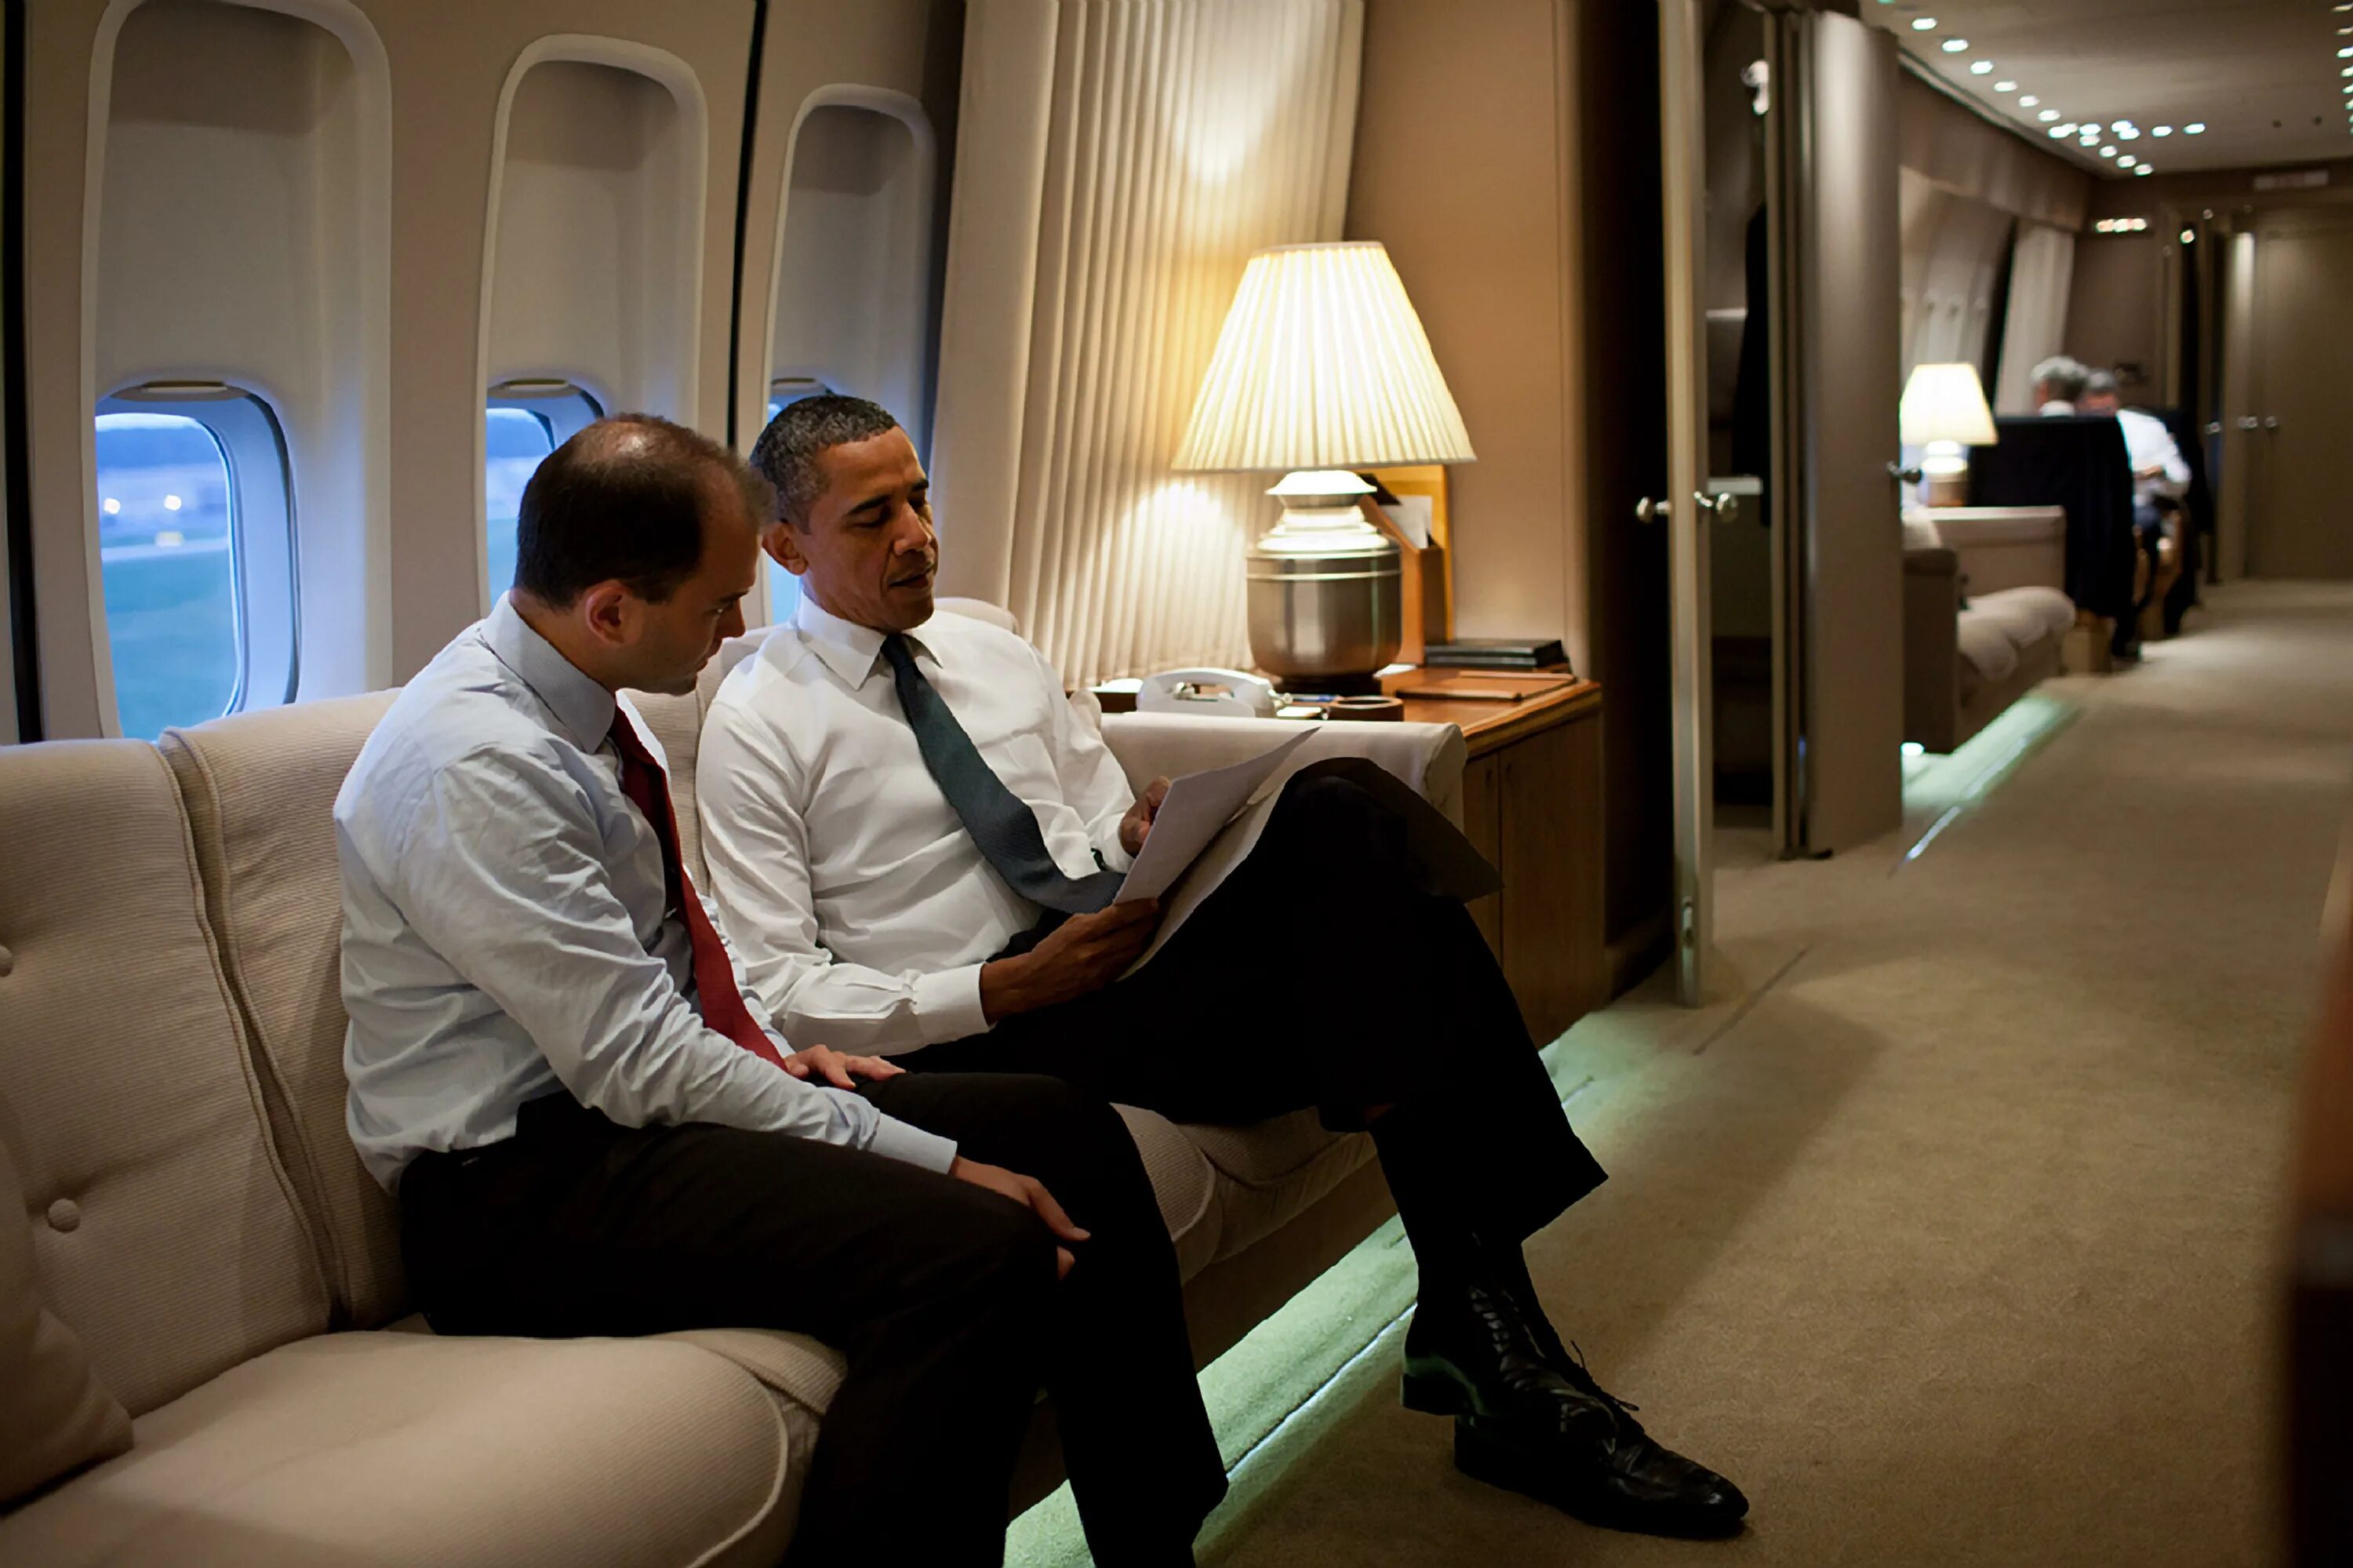 Борт 1 президента США. Самолет Путина борт номер 1. Борт номер 1 президента США внутри. Барак Обама в самолете.